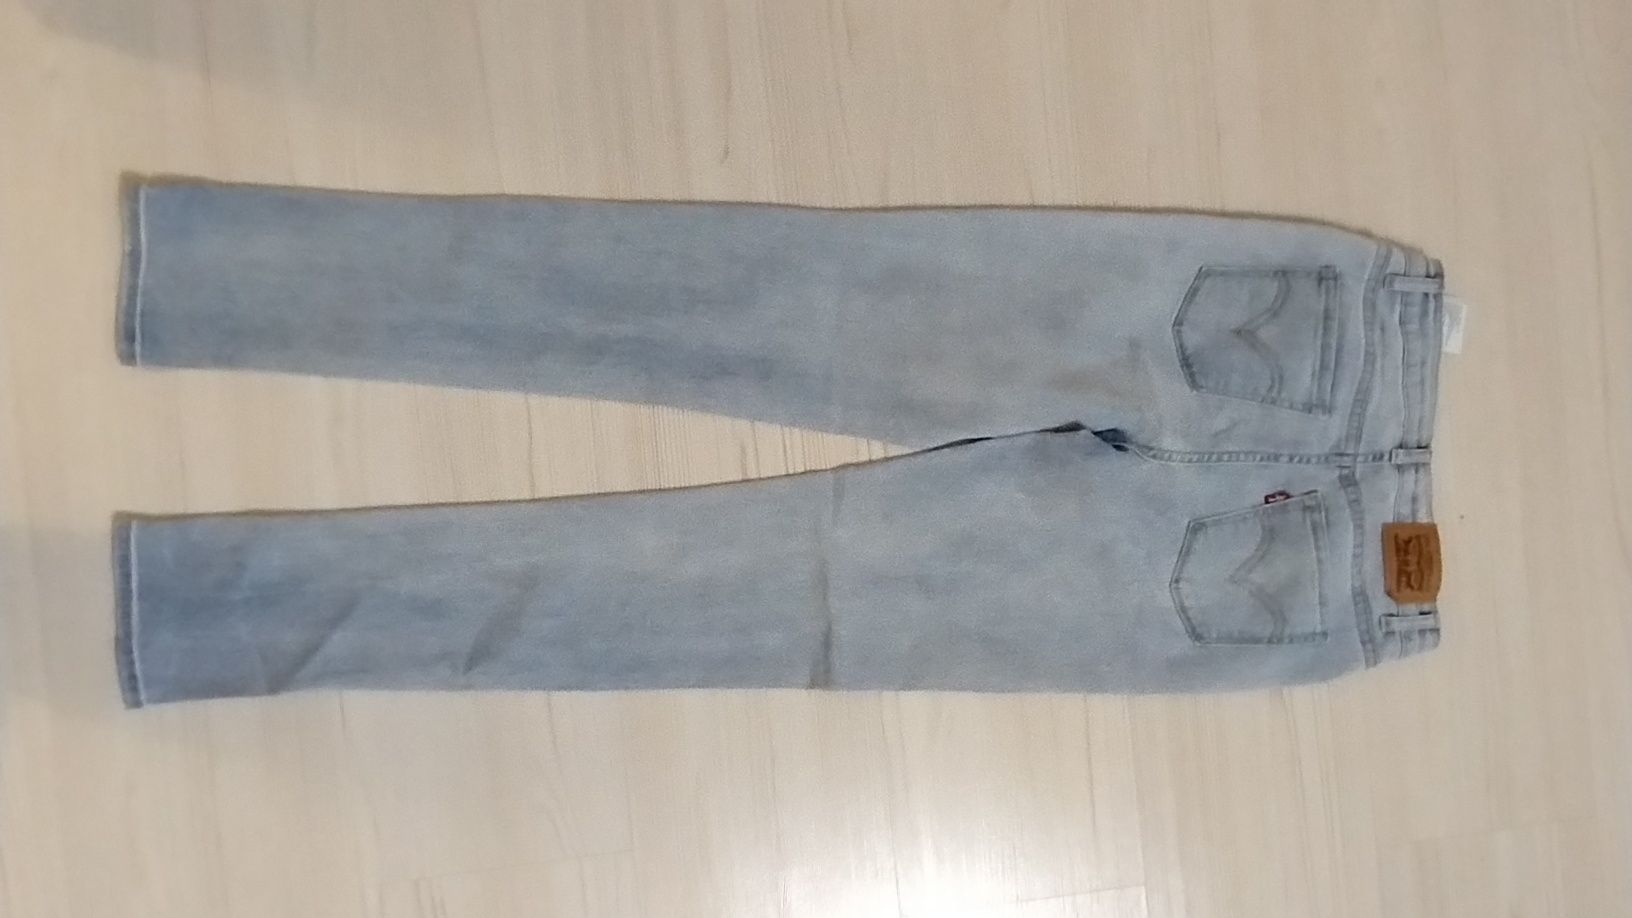 Levi's jeans super skinny fete măsura 12 ani (152)